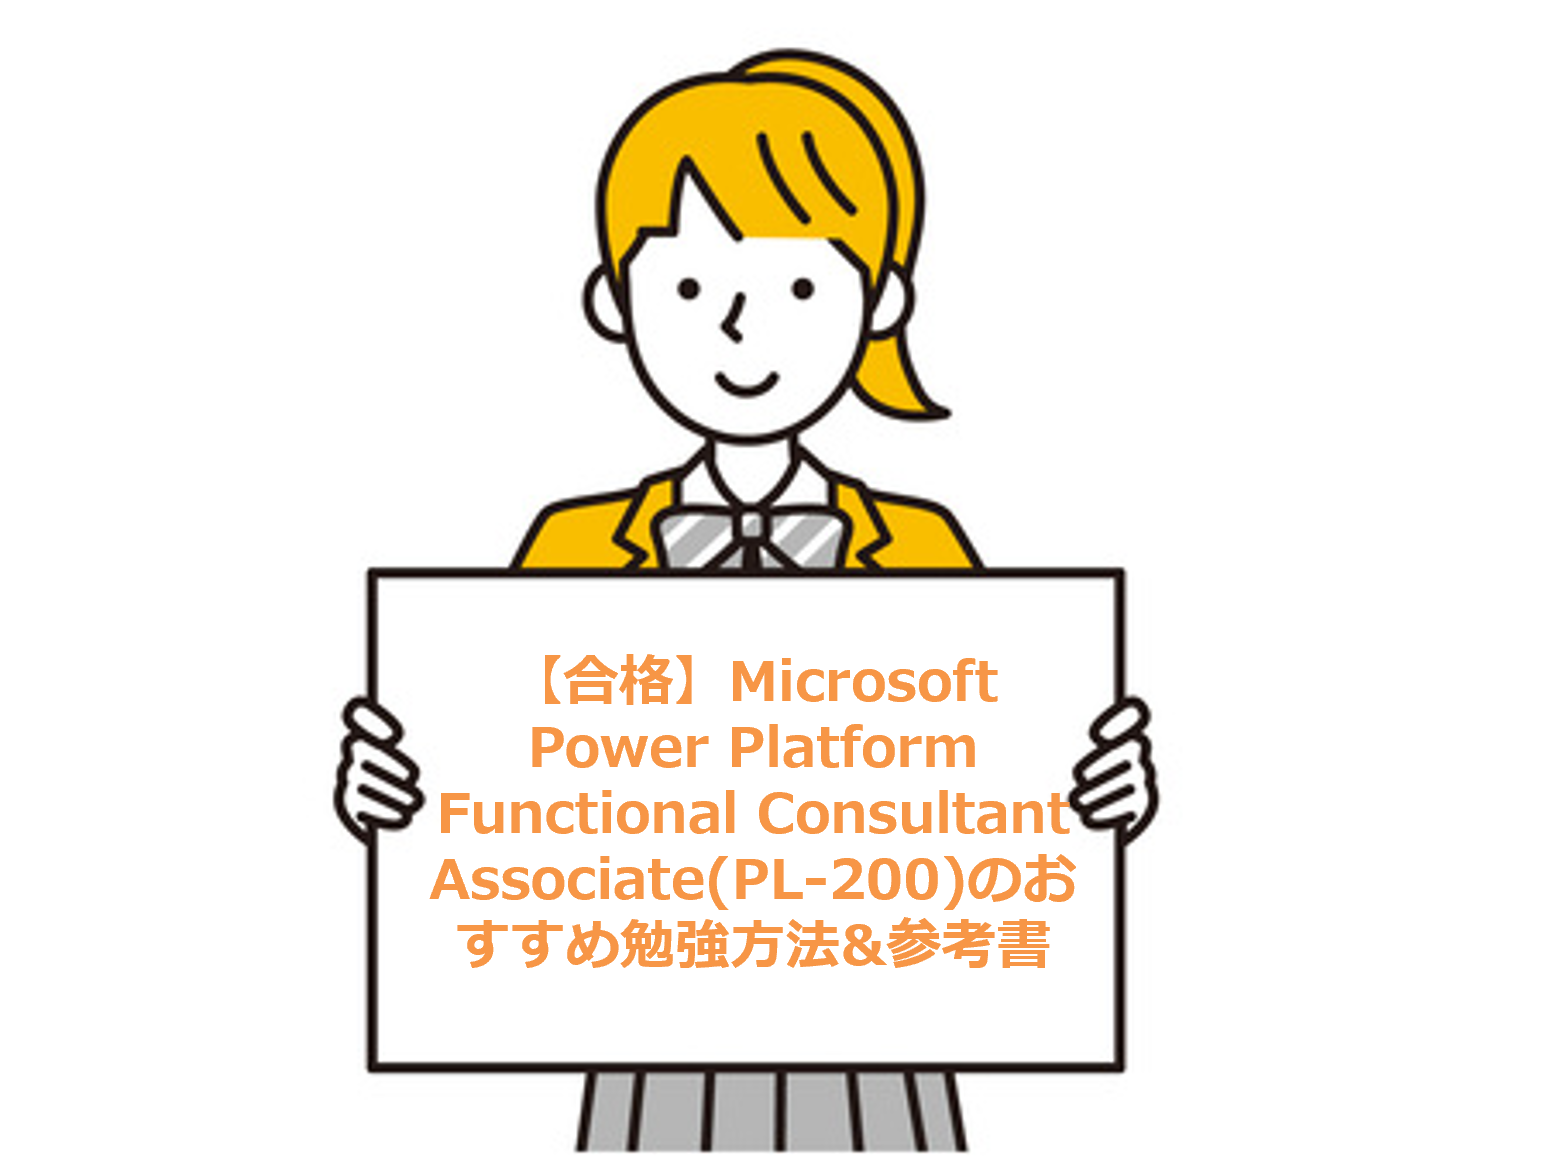 Microsoft Power Platform Functional Consultant Associate(PL-200)